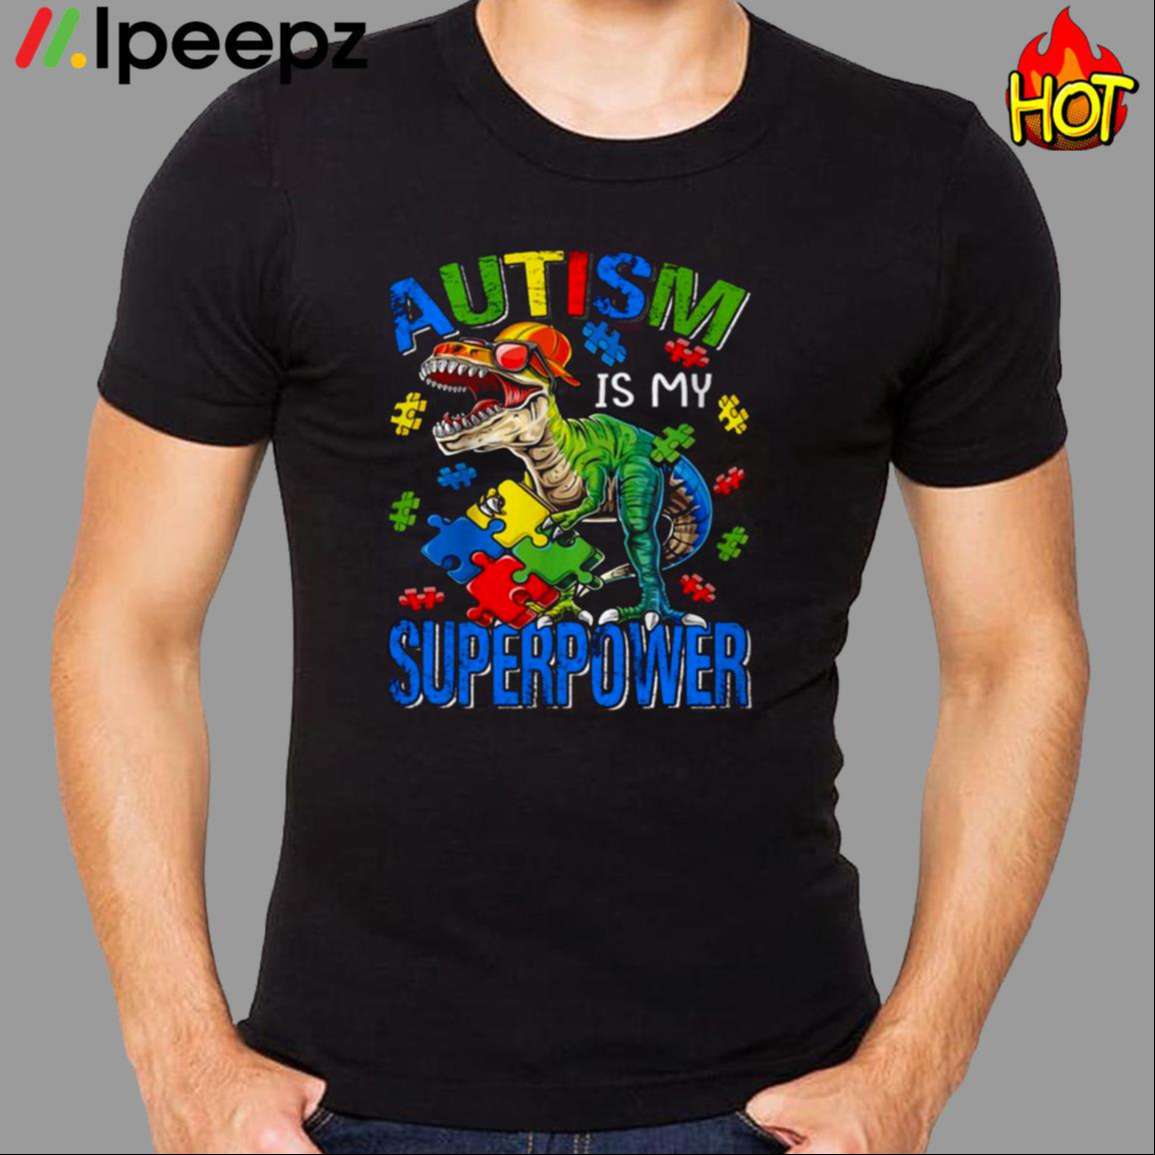 Auytism Superpower Shirt